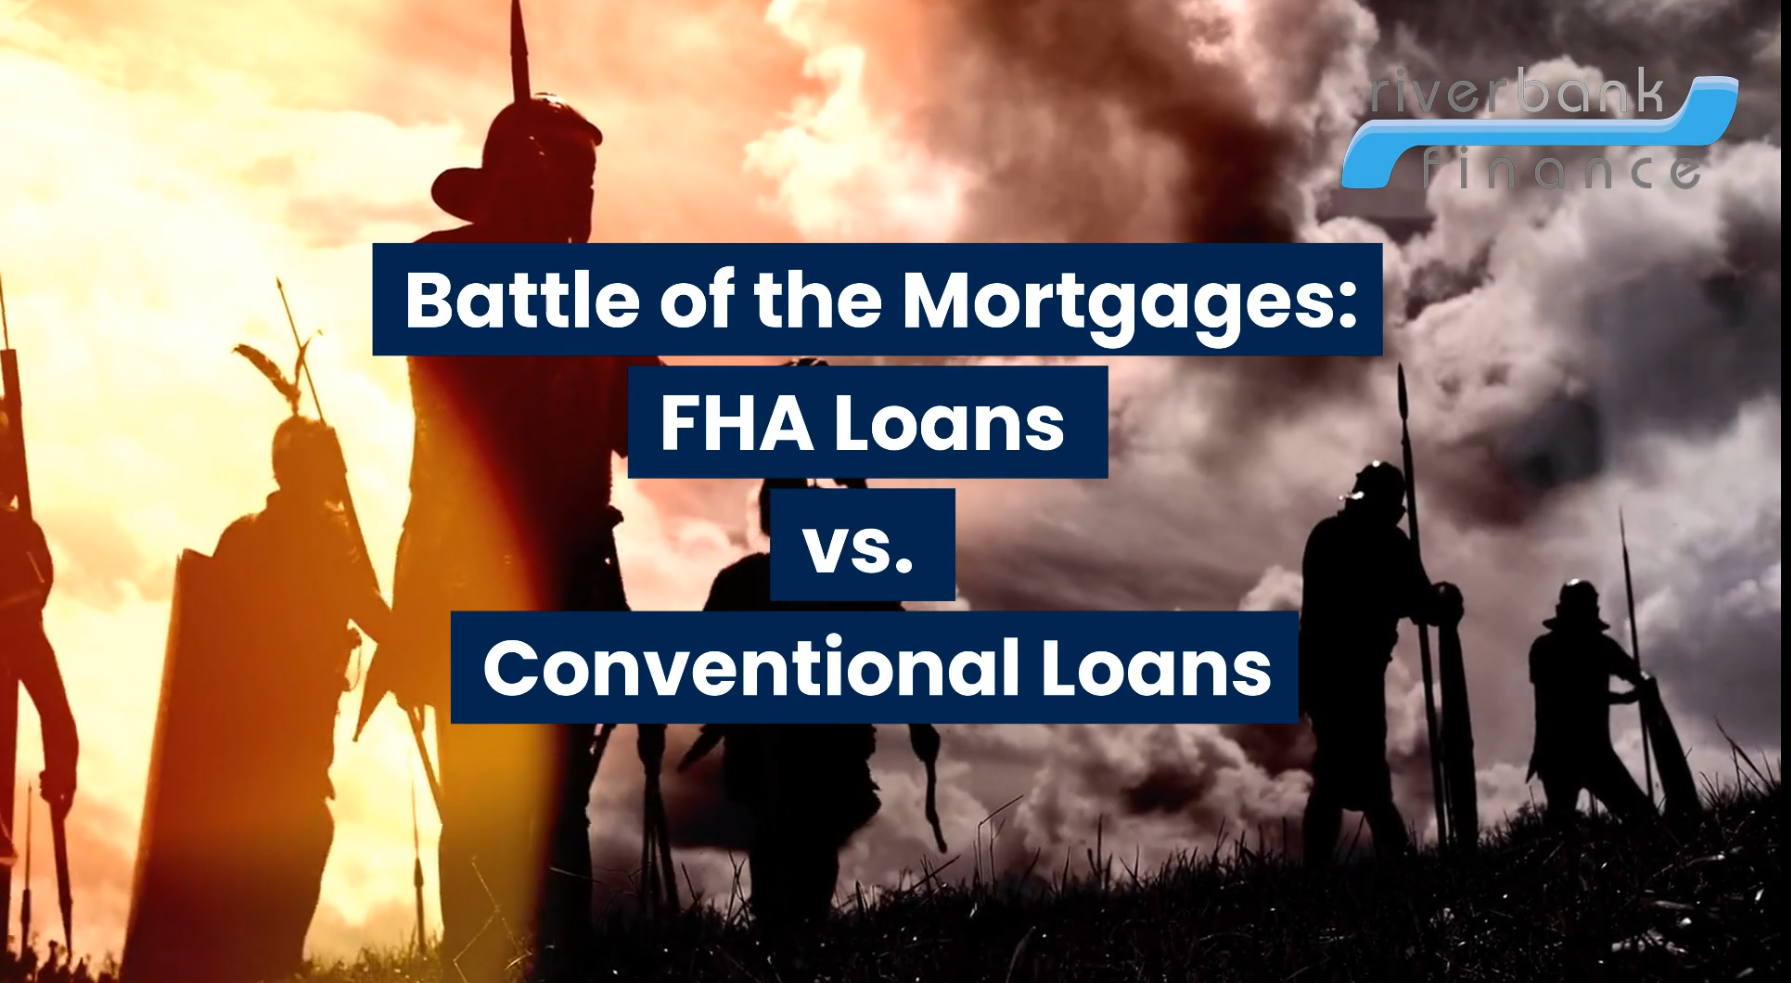 Compare FHA loans vs Conventional Loans